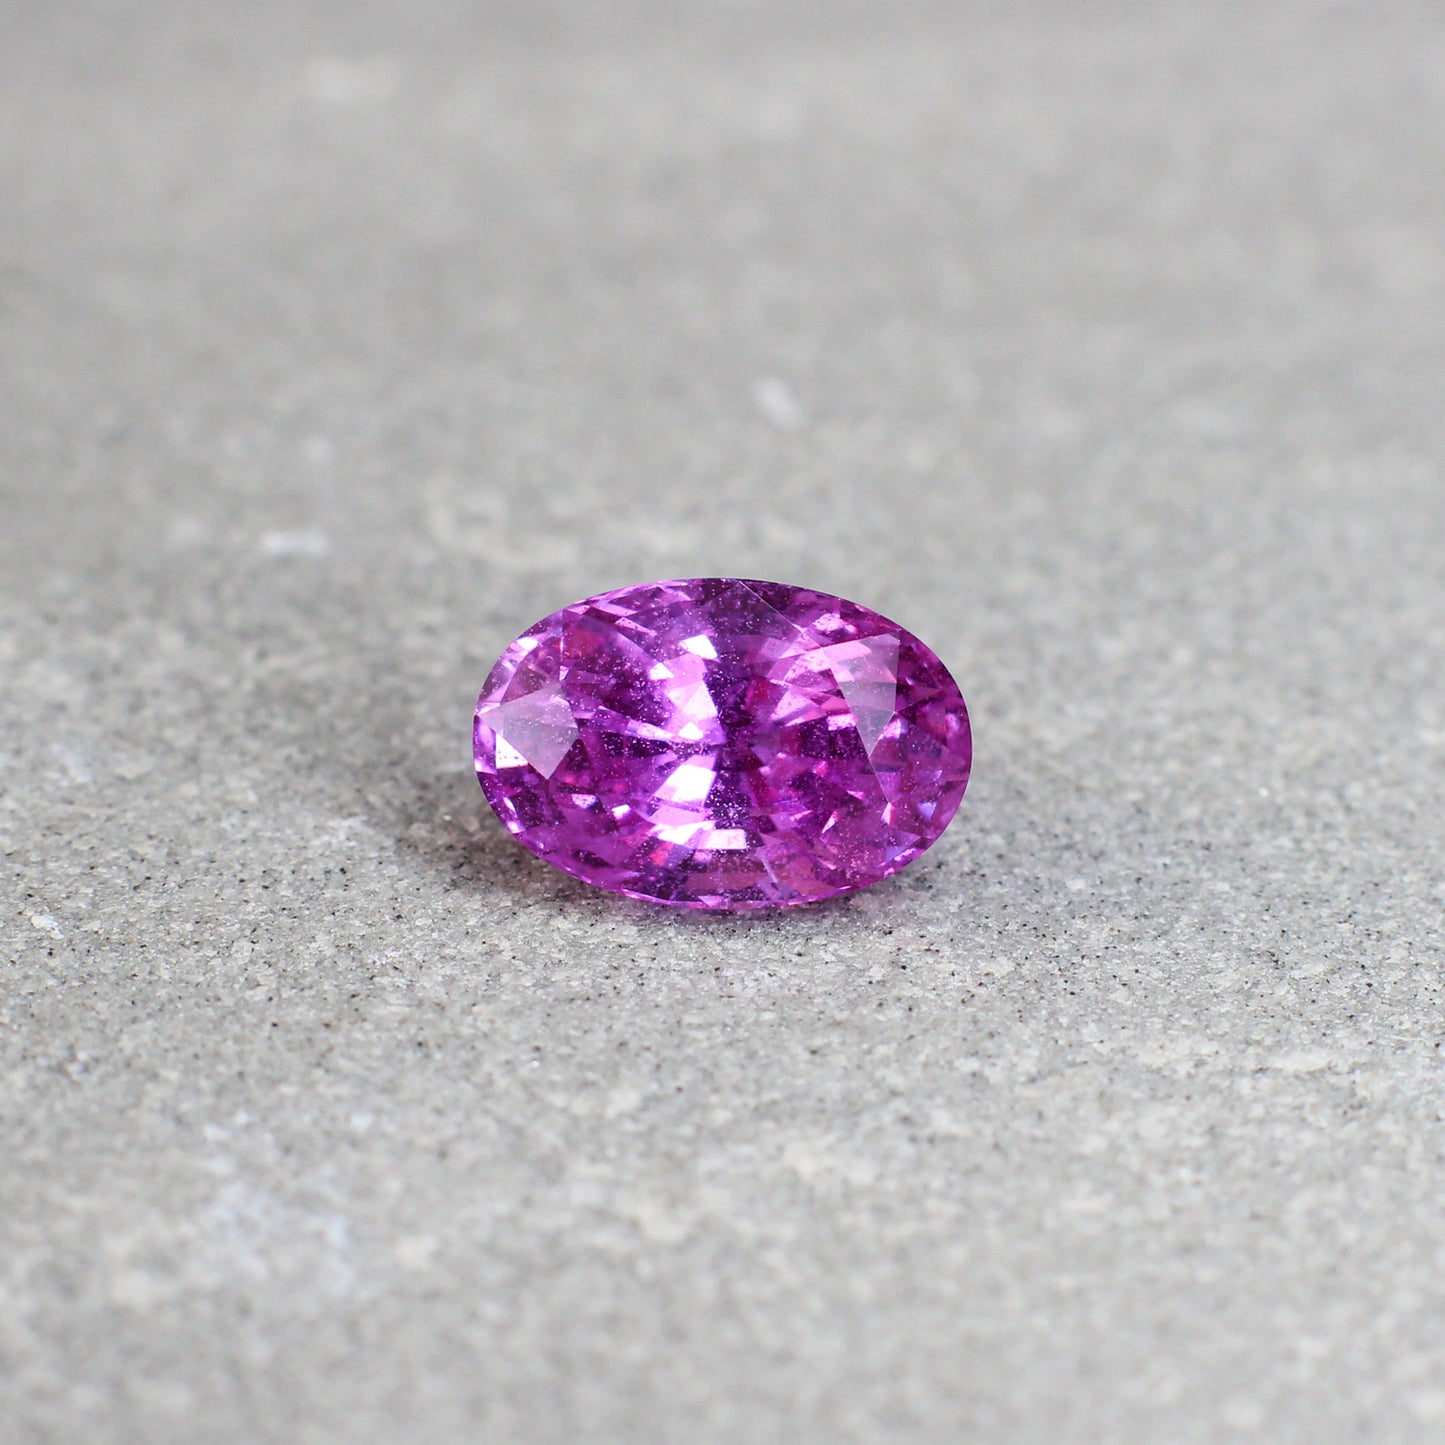 2.64ct Purplish Pink, Oval Sapphire, Heated, Madagascar - 9.21 x 6.09 x 5.58mm